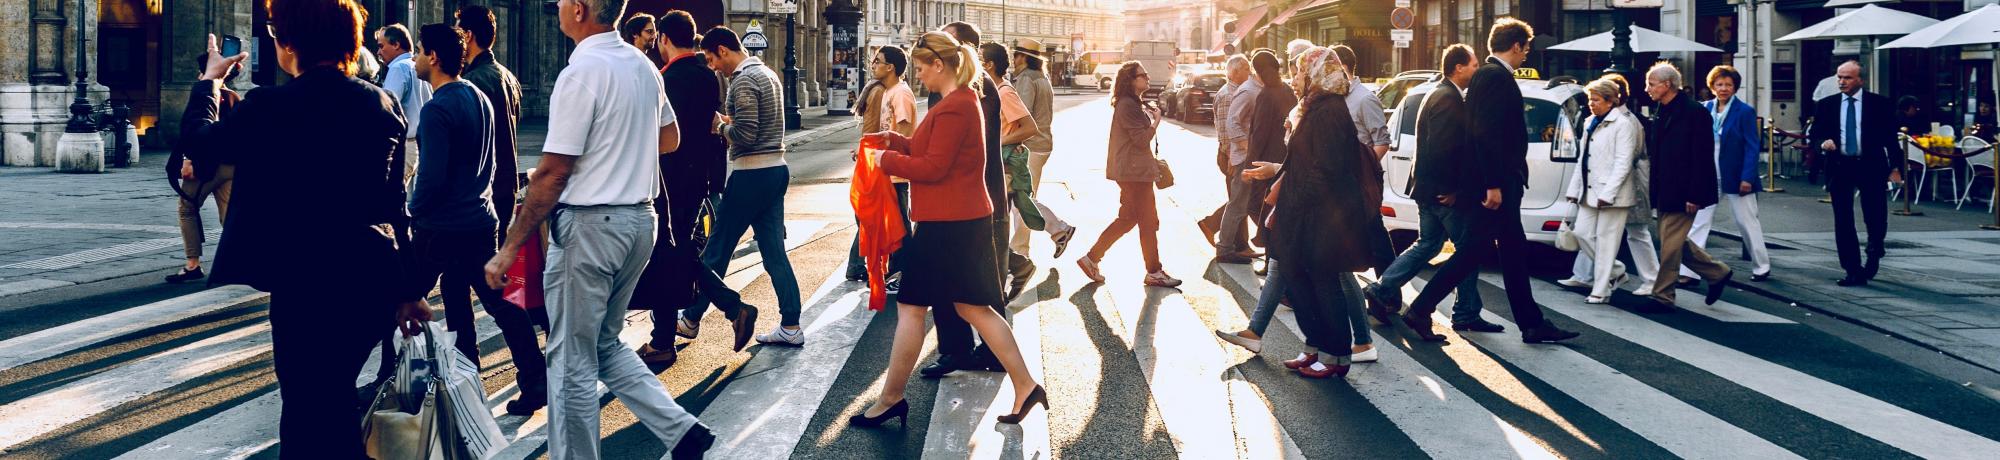 Group of people walking in a crosswalk